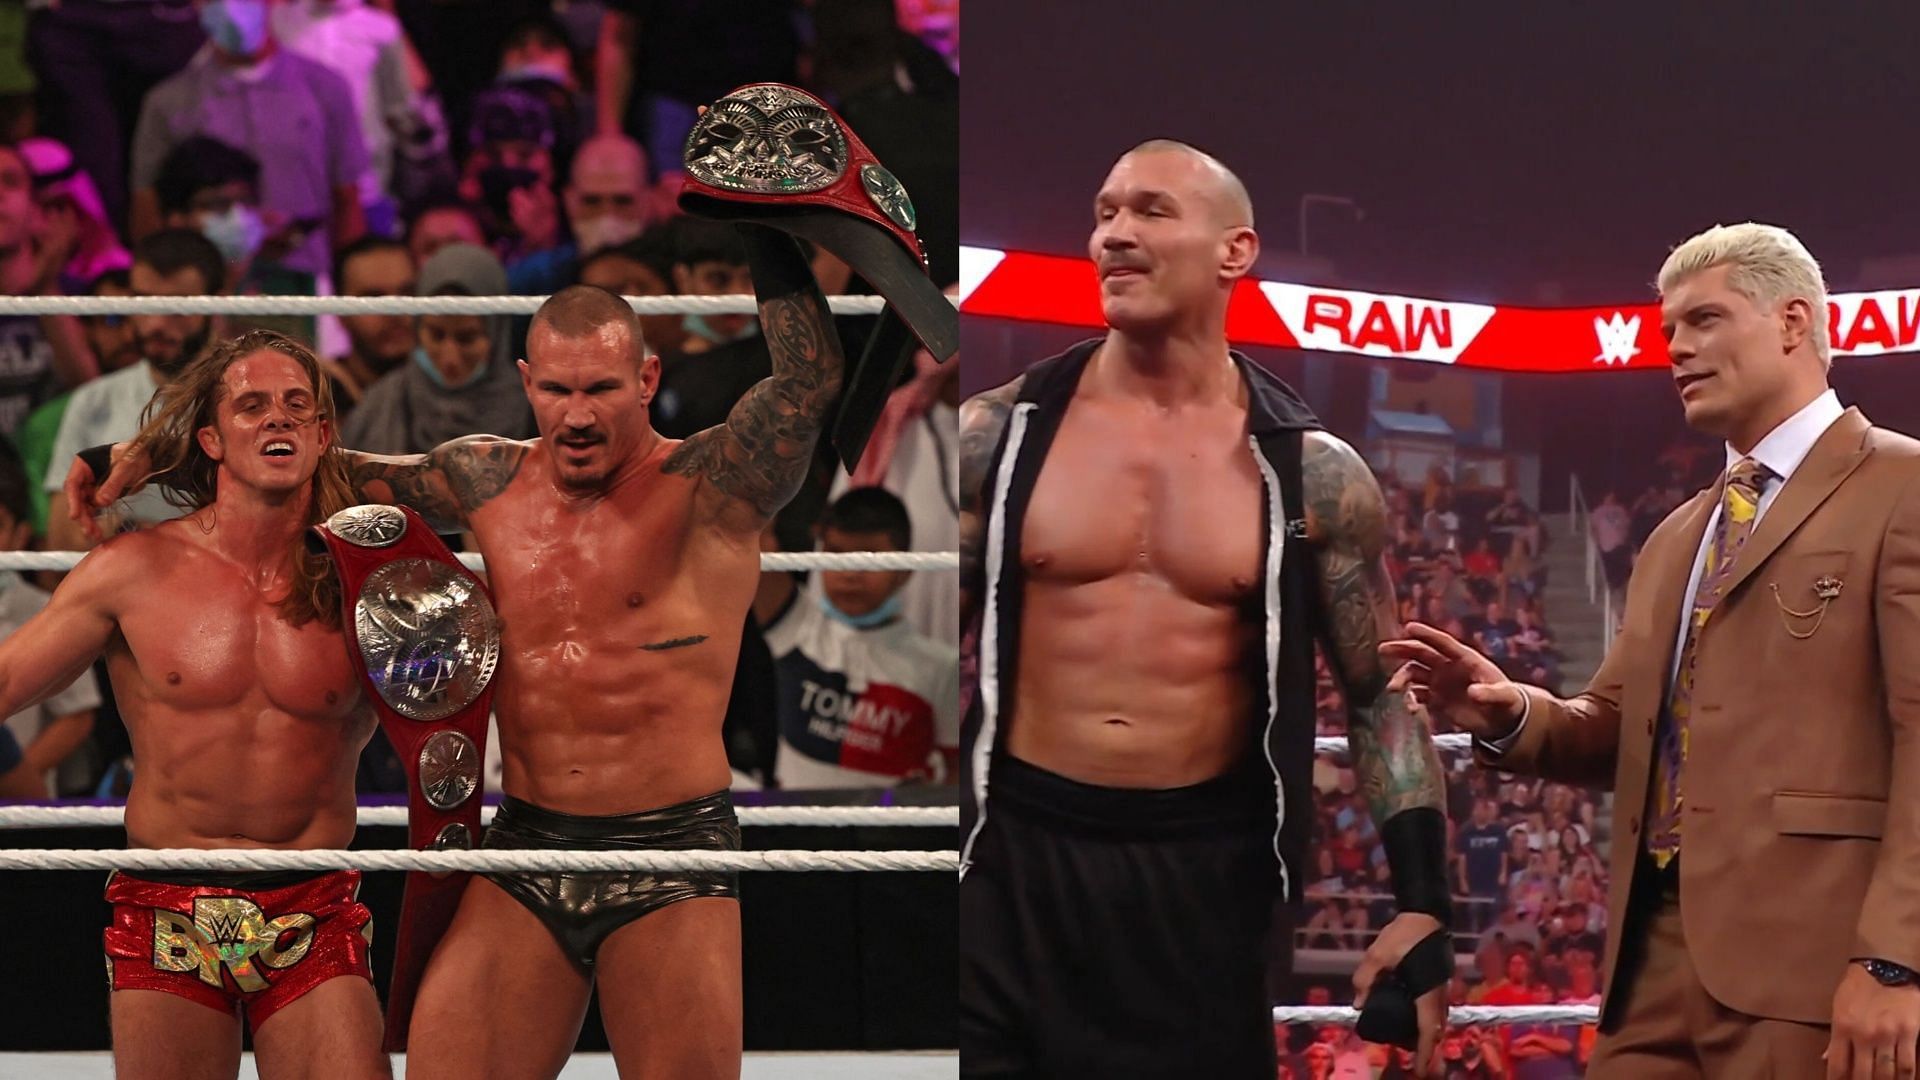 Randy Orton has mentored both Matt Riddle and Cody Rhodes.